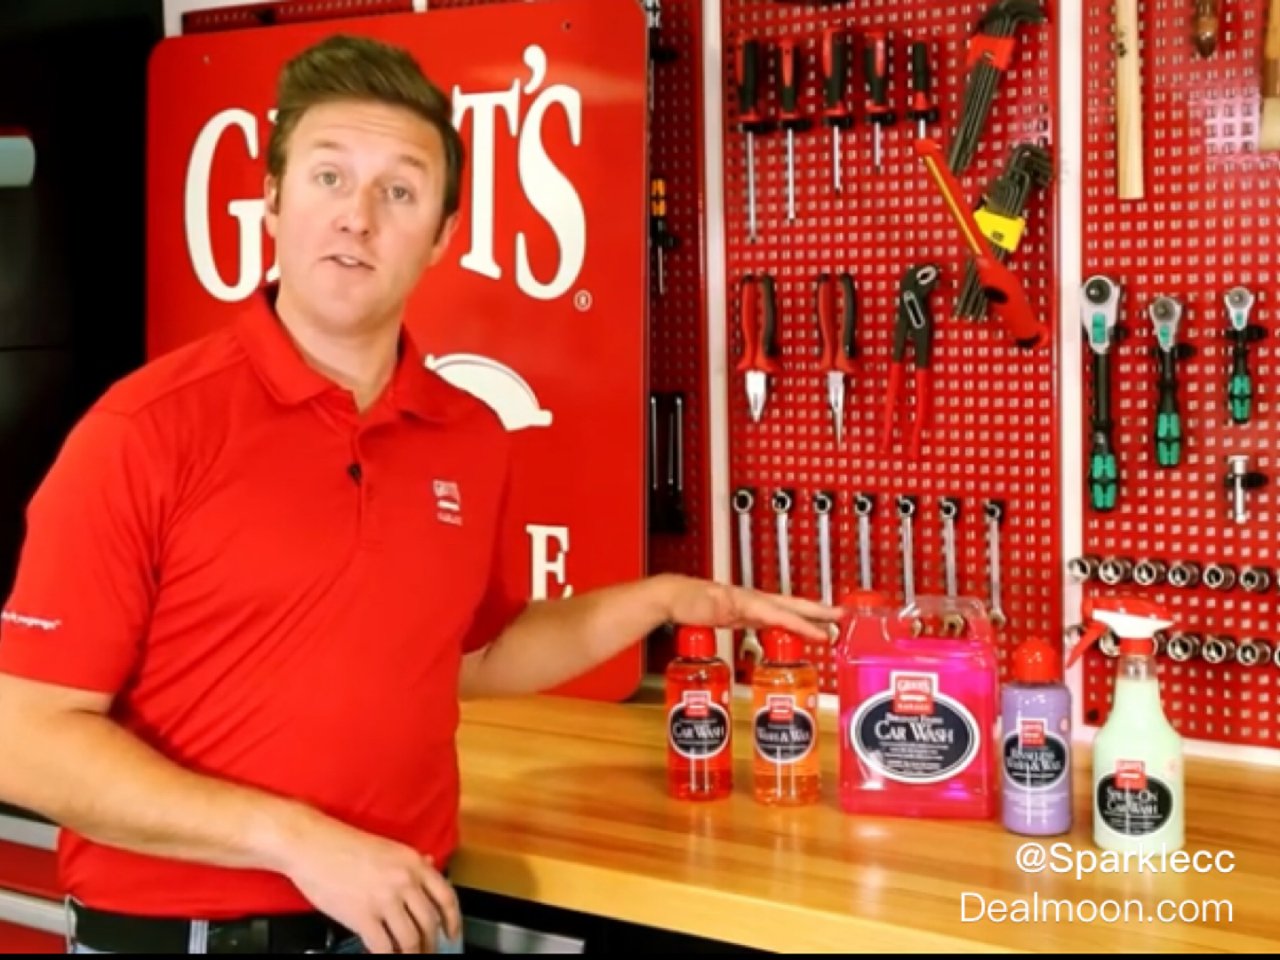 GRIOT'S Garage洗车液丨一款非常好用的洗车帮手| 晒晒圈旅行精选